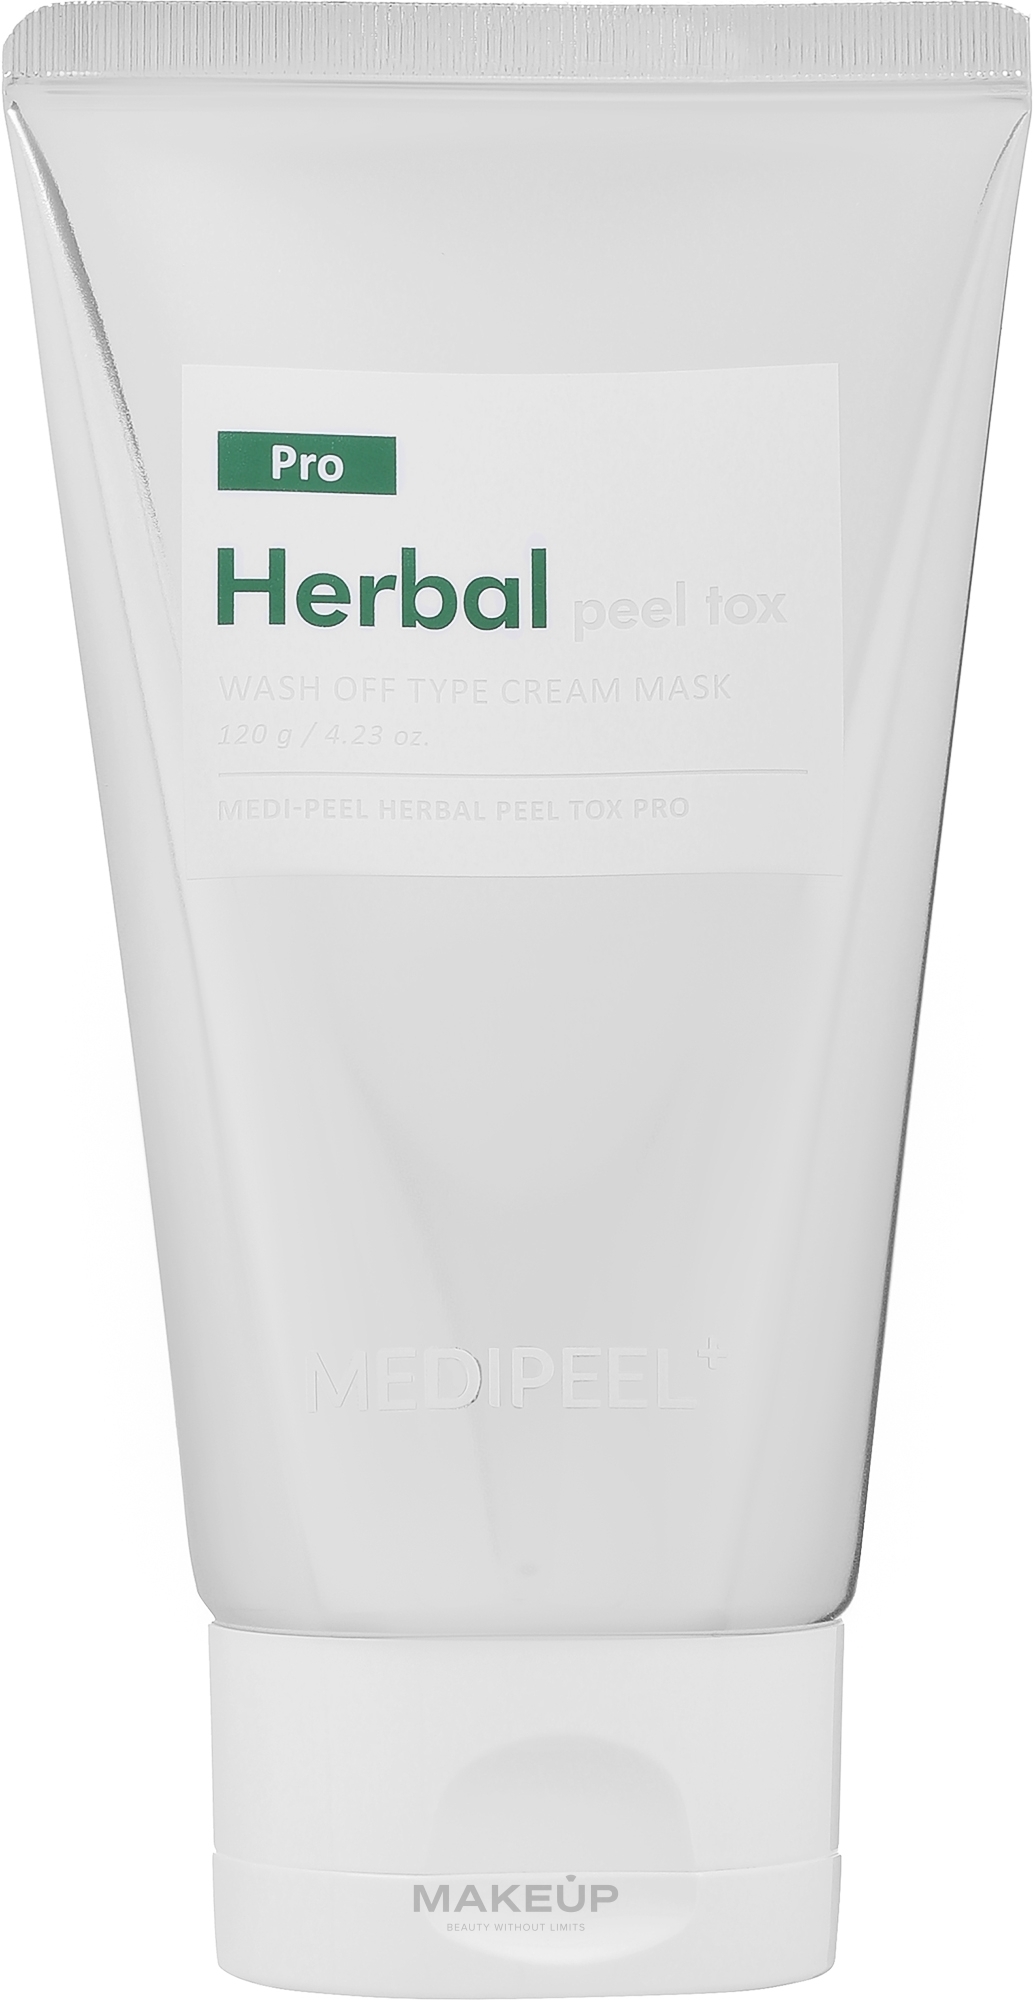 Заспокійливий пілінг-маска з ефектом детоксу - MEDIPEEL Herbal Peel Tox Wash Off Type Cream Mask — фото 120g